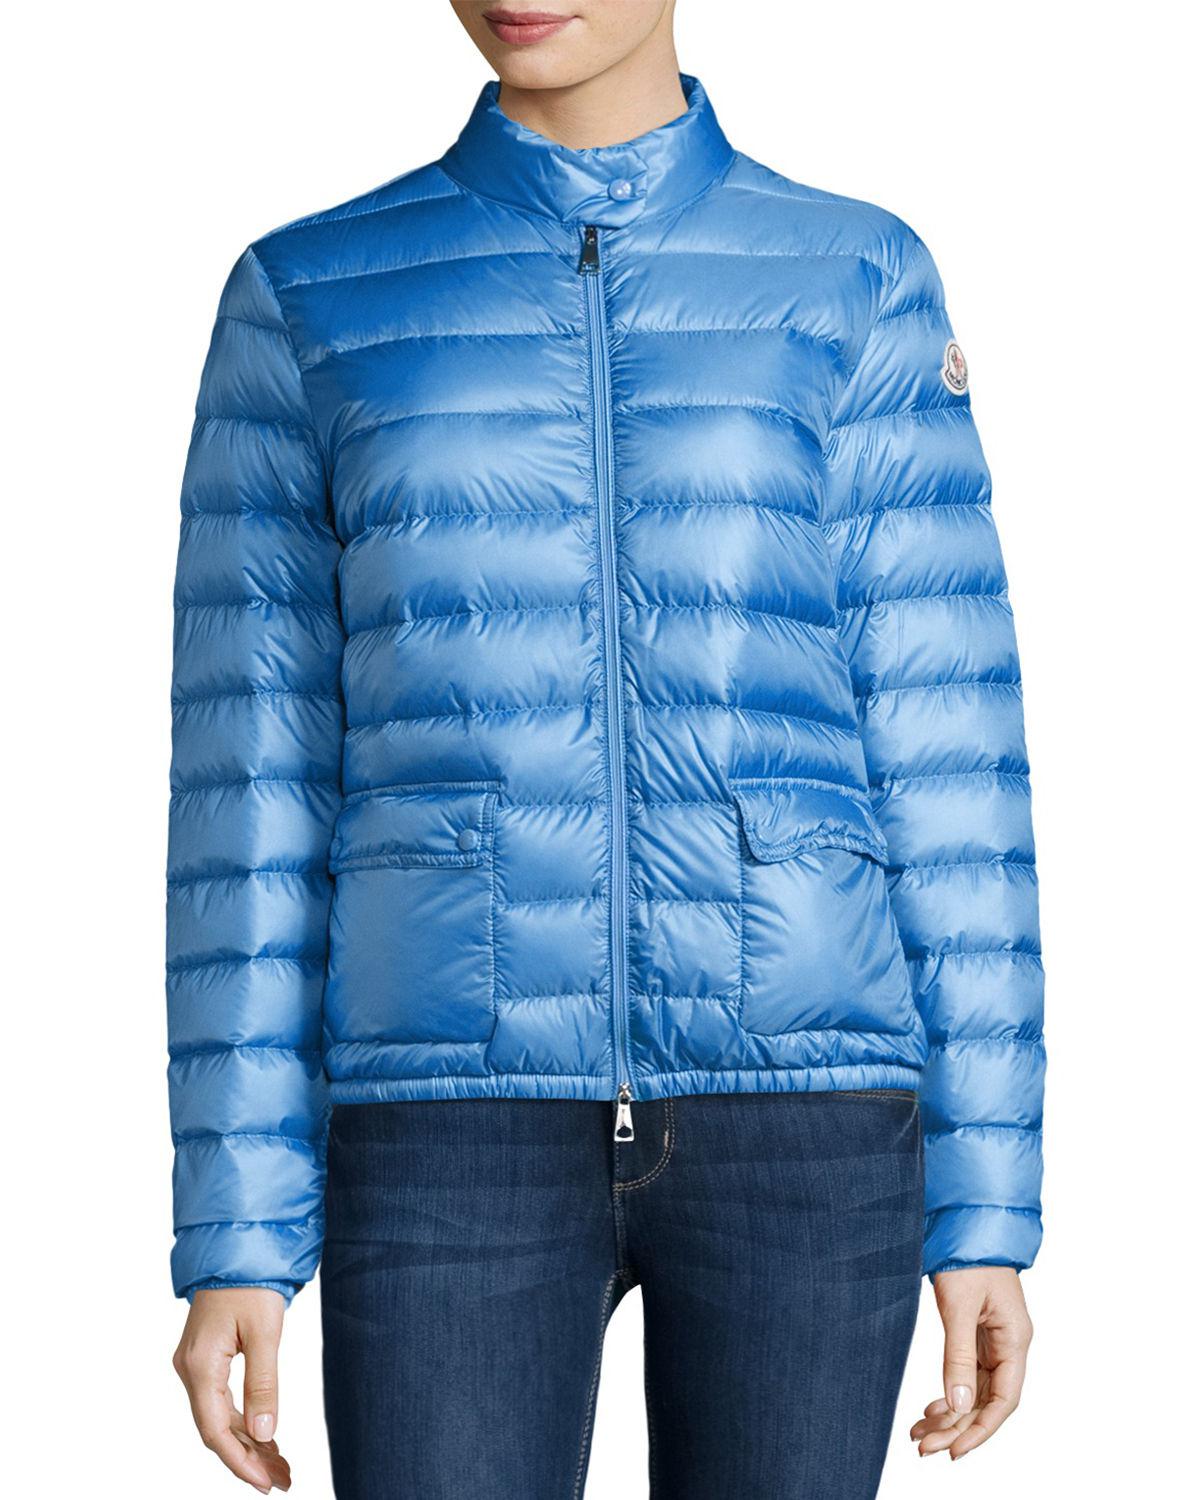 Moncler Lans Basic Down Jacket in Sky Blue (Blue) - Lyst